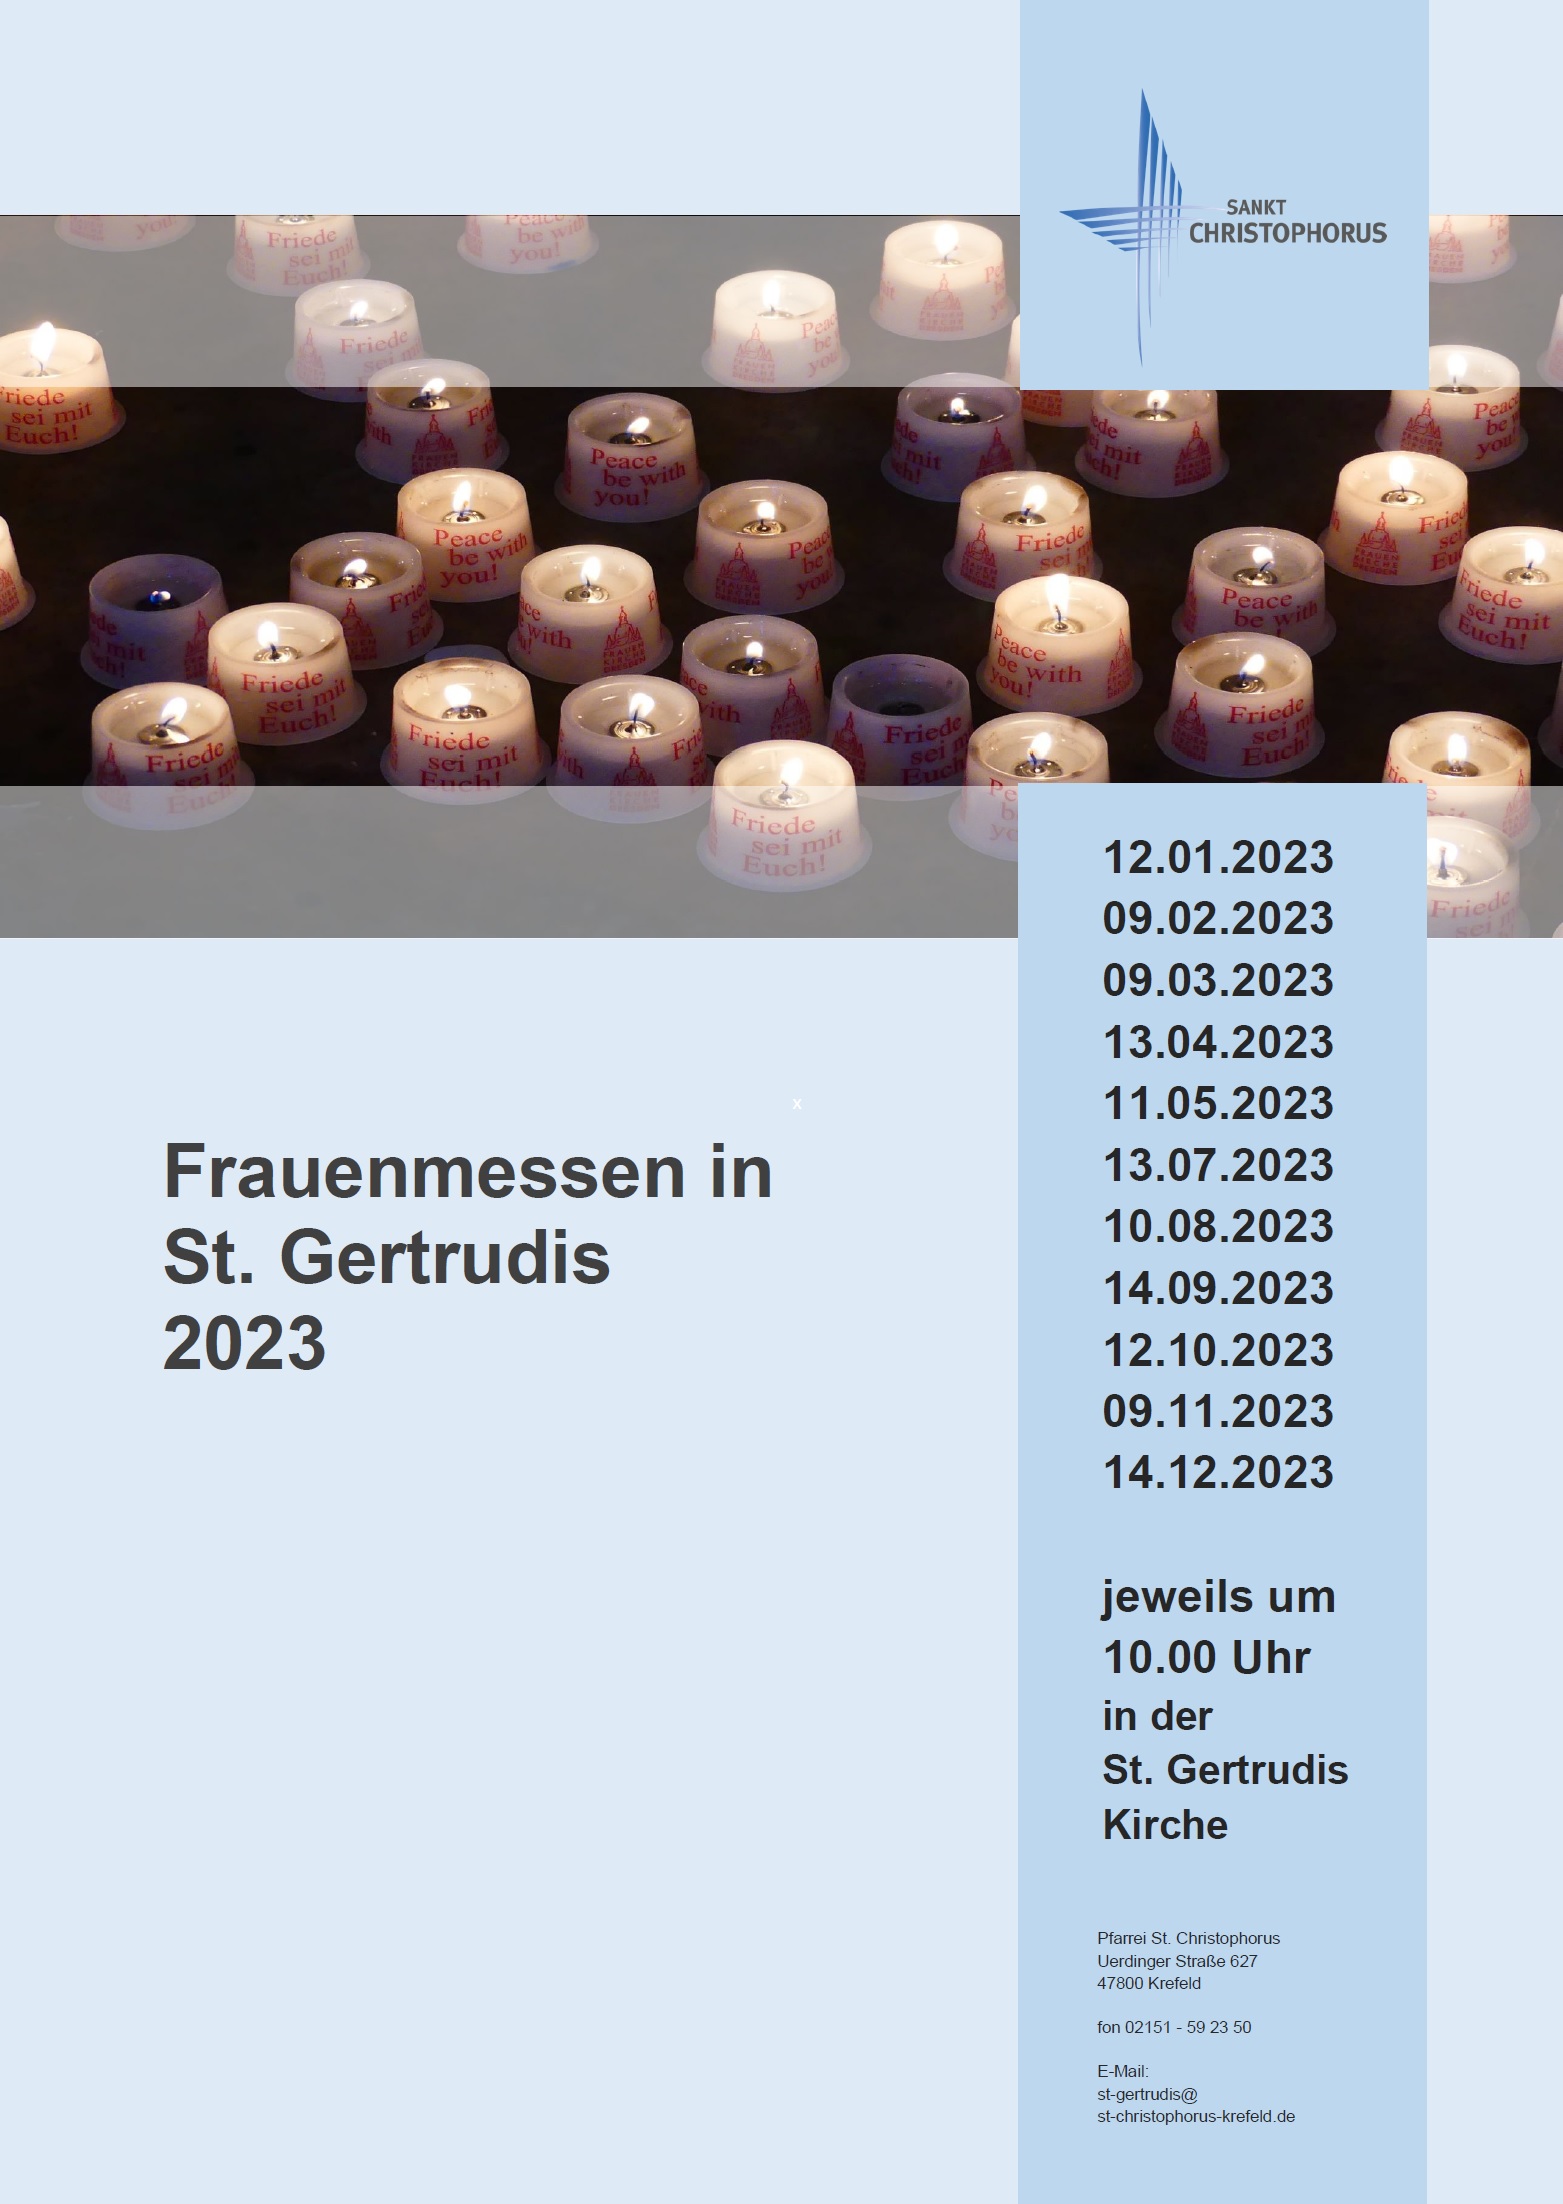 FrauenmessenGertrudis2023 (c) St. Christophorus